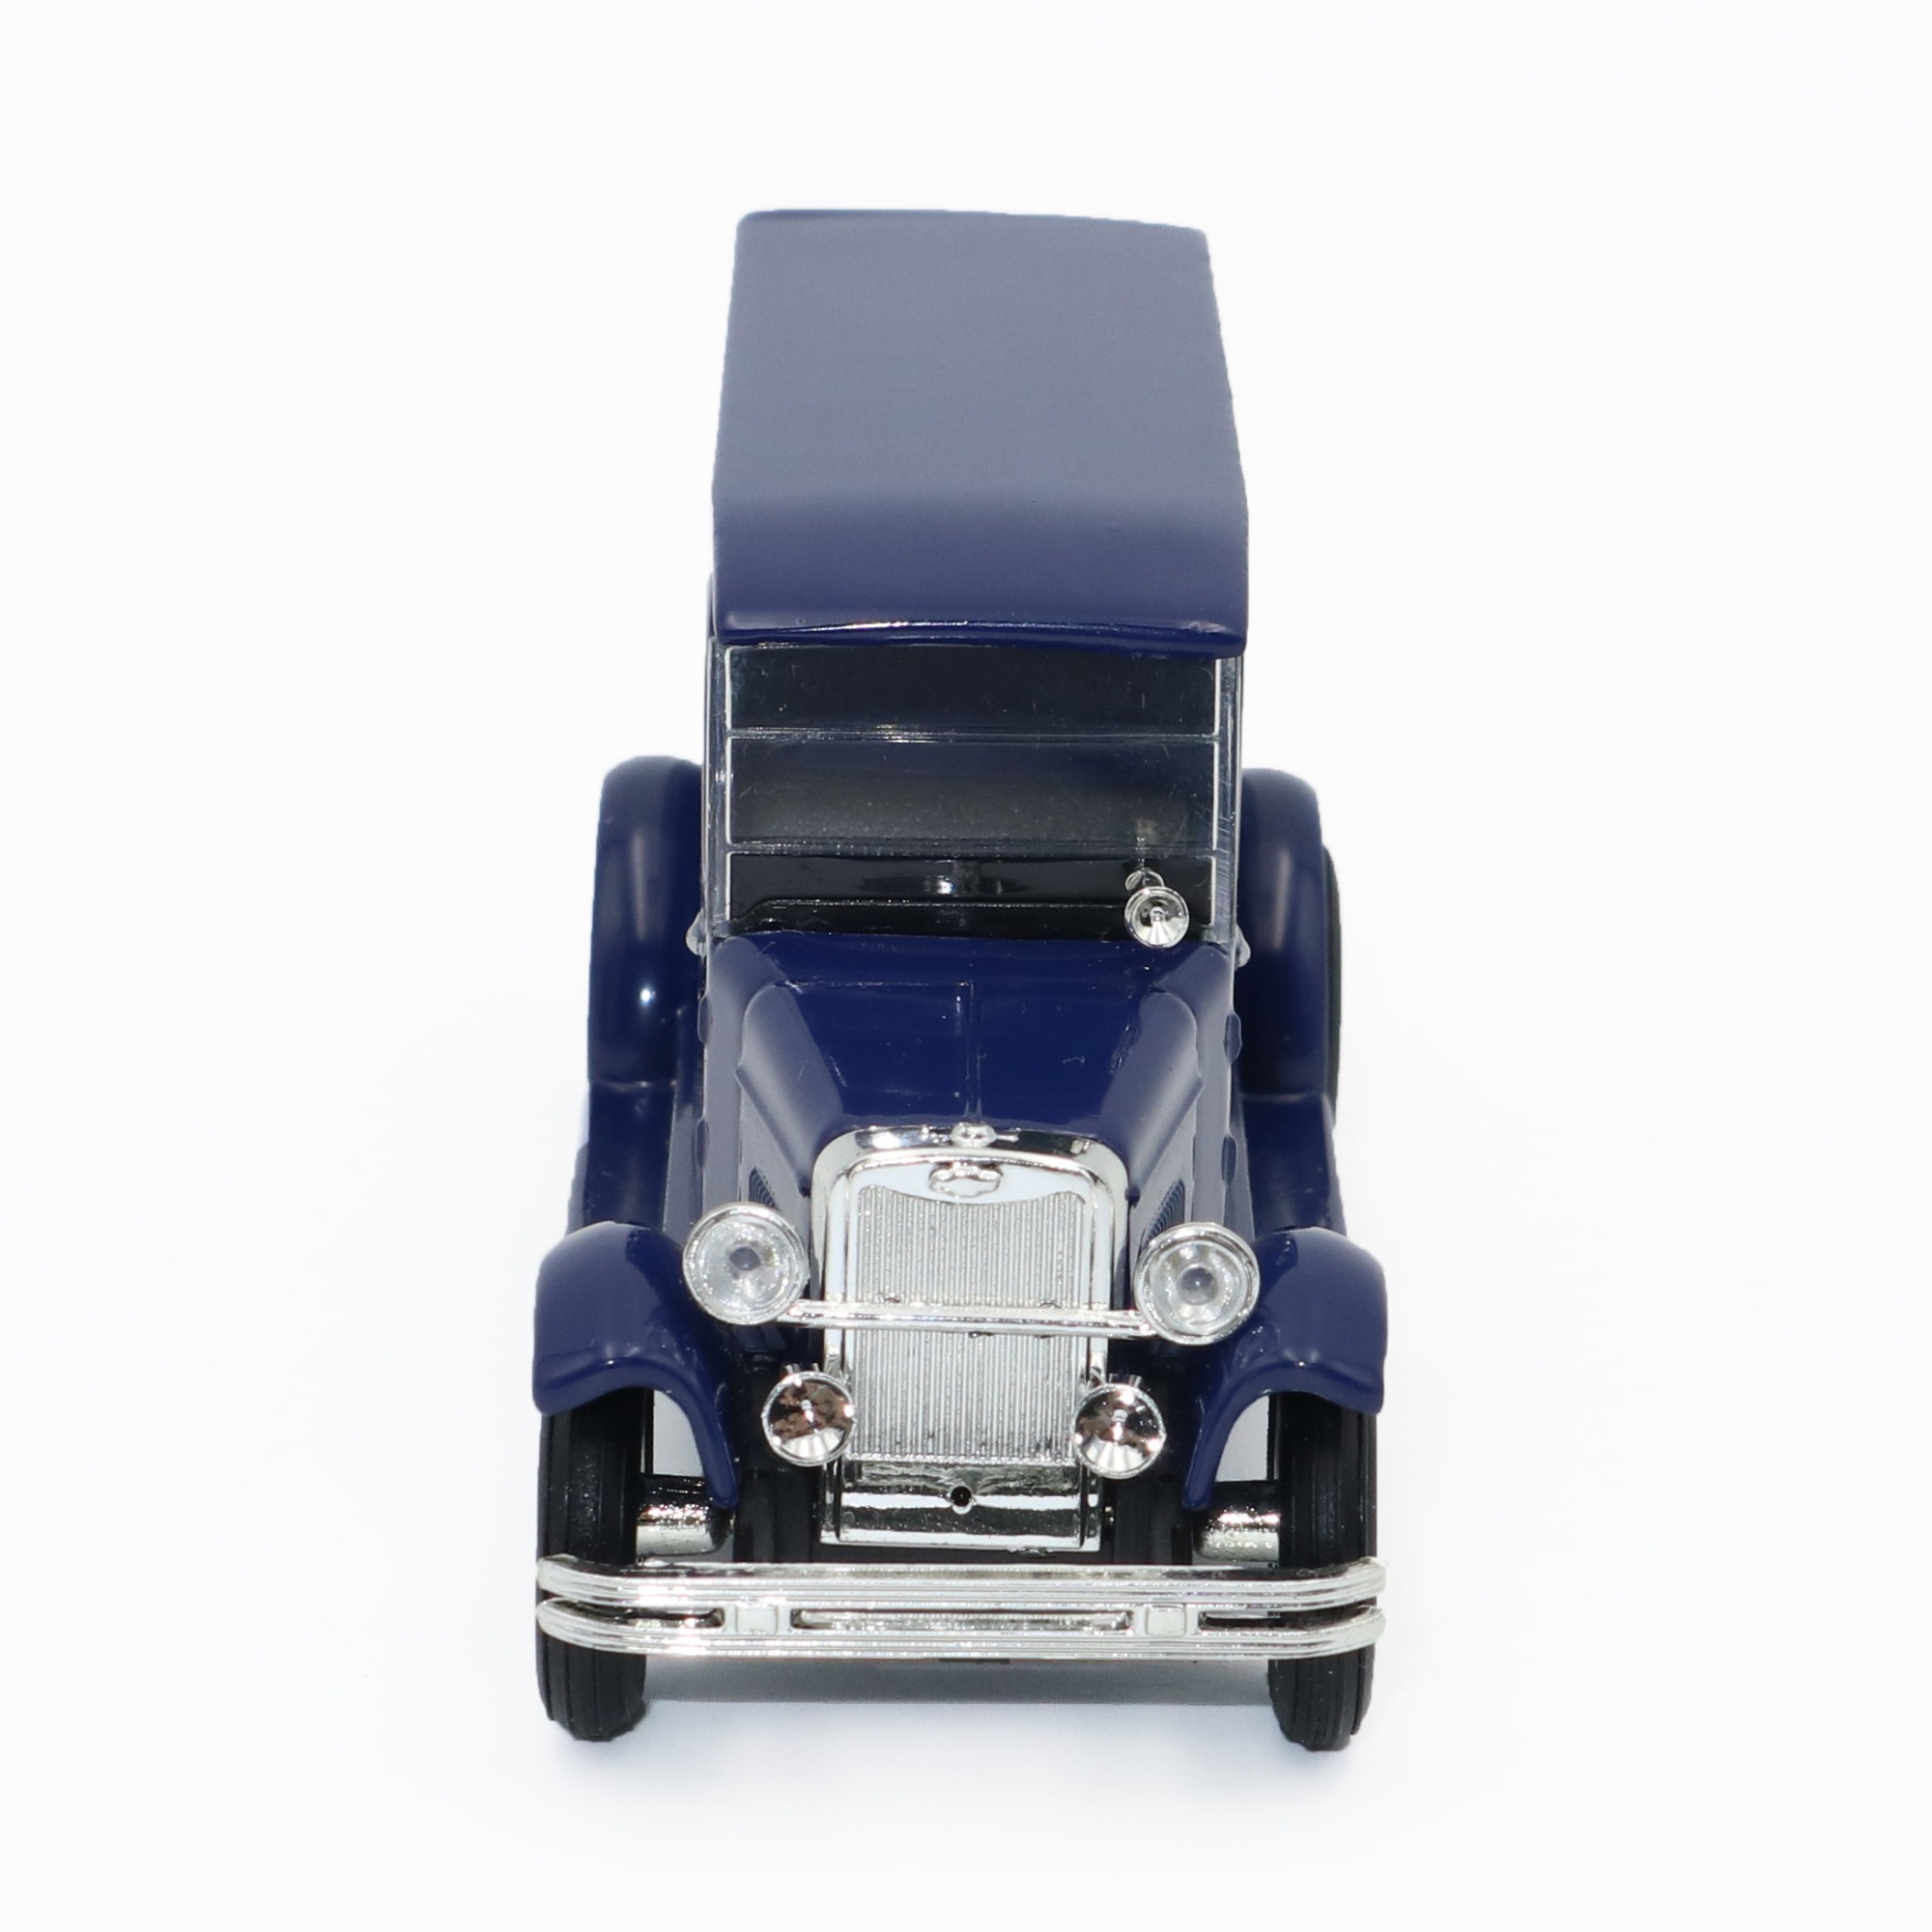 Vintage diecast model car scale 1:32 vehicle toy model